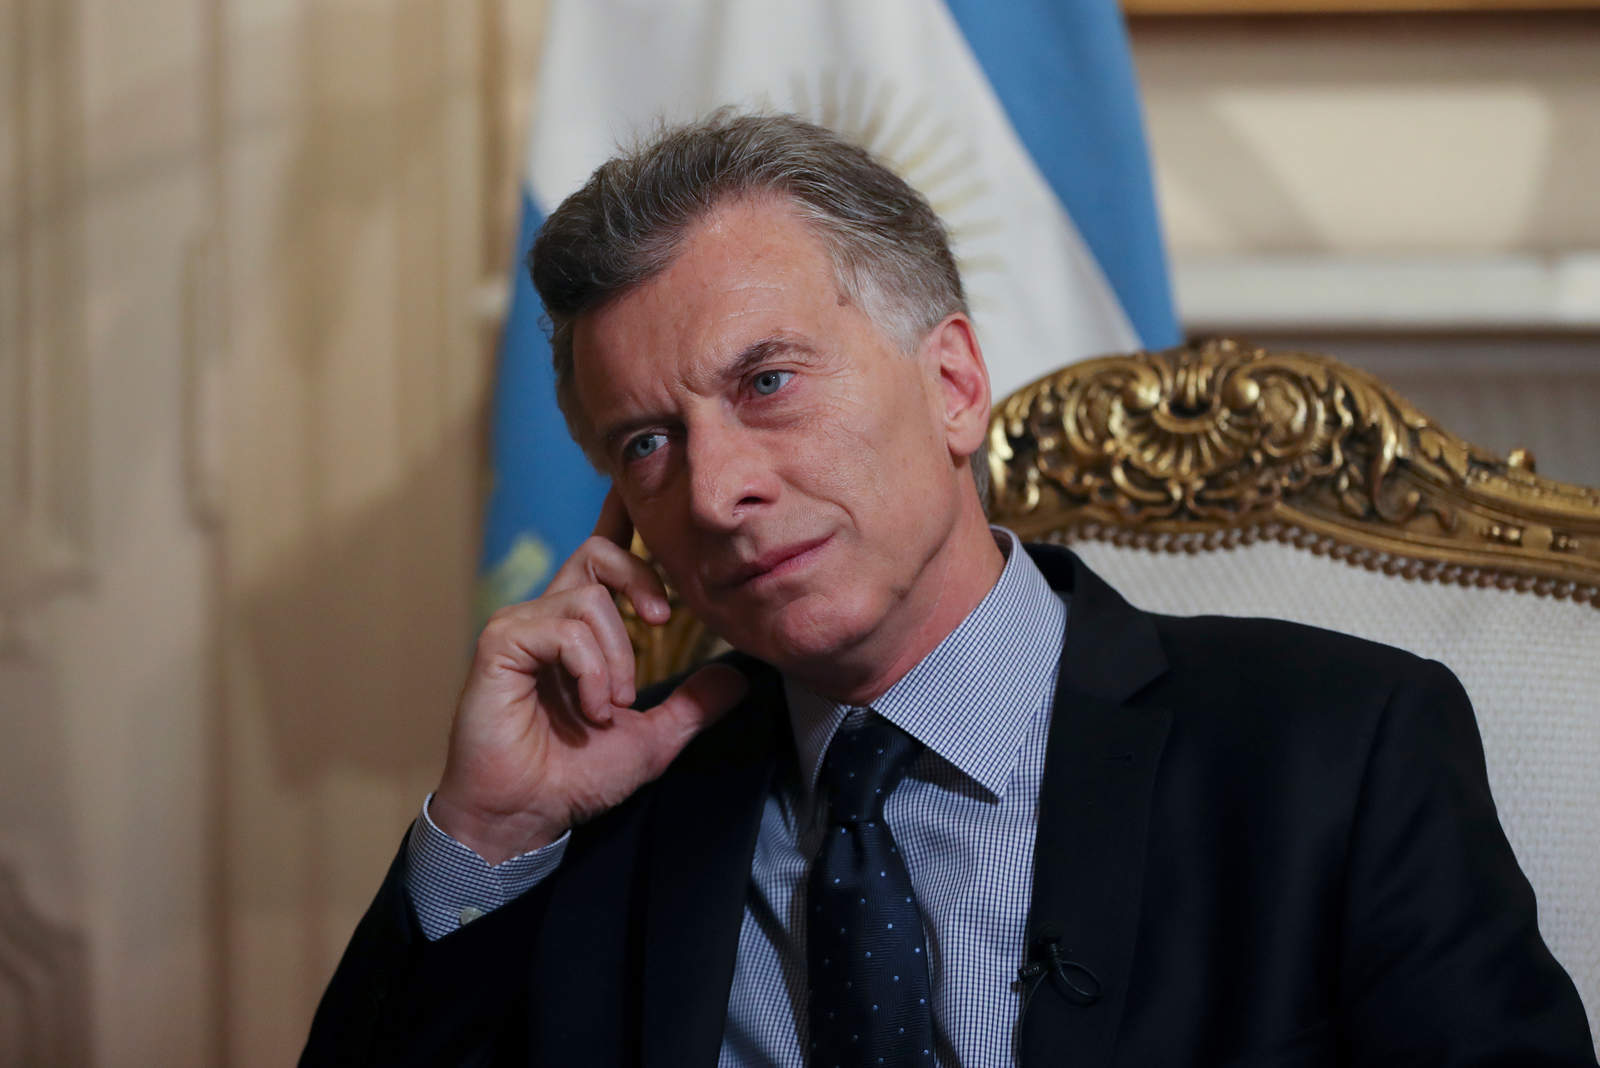 Duro que Boca-River se juegue fuera de Argentina: Macri